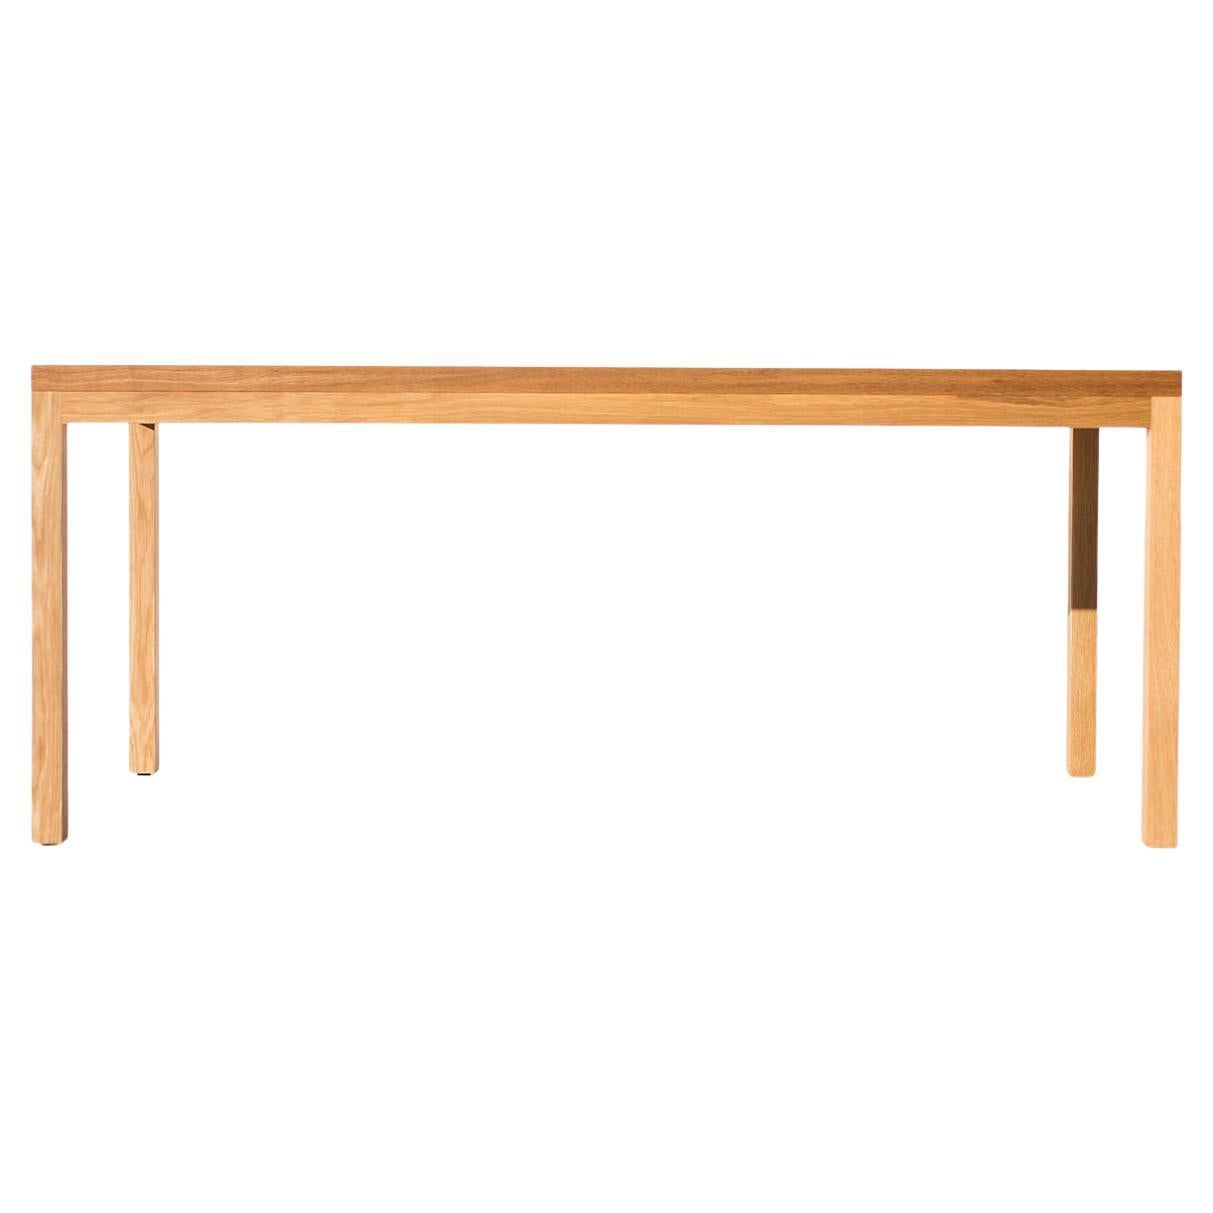 Bertu Furniture Dining Room Tables